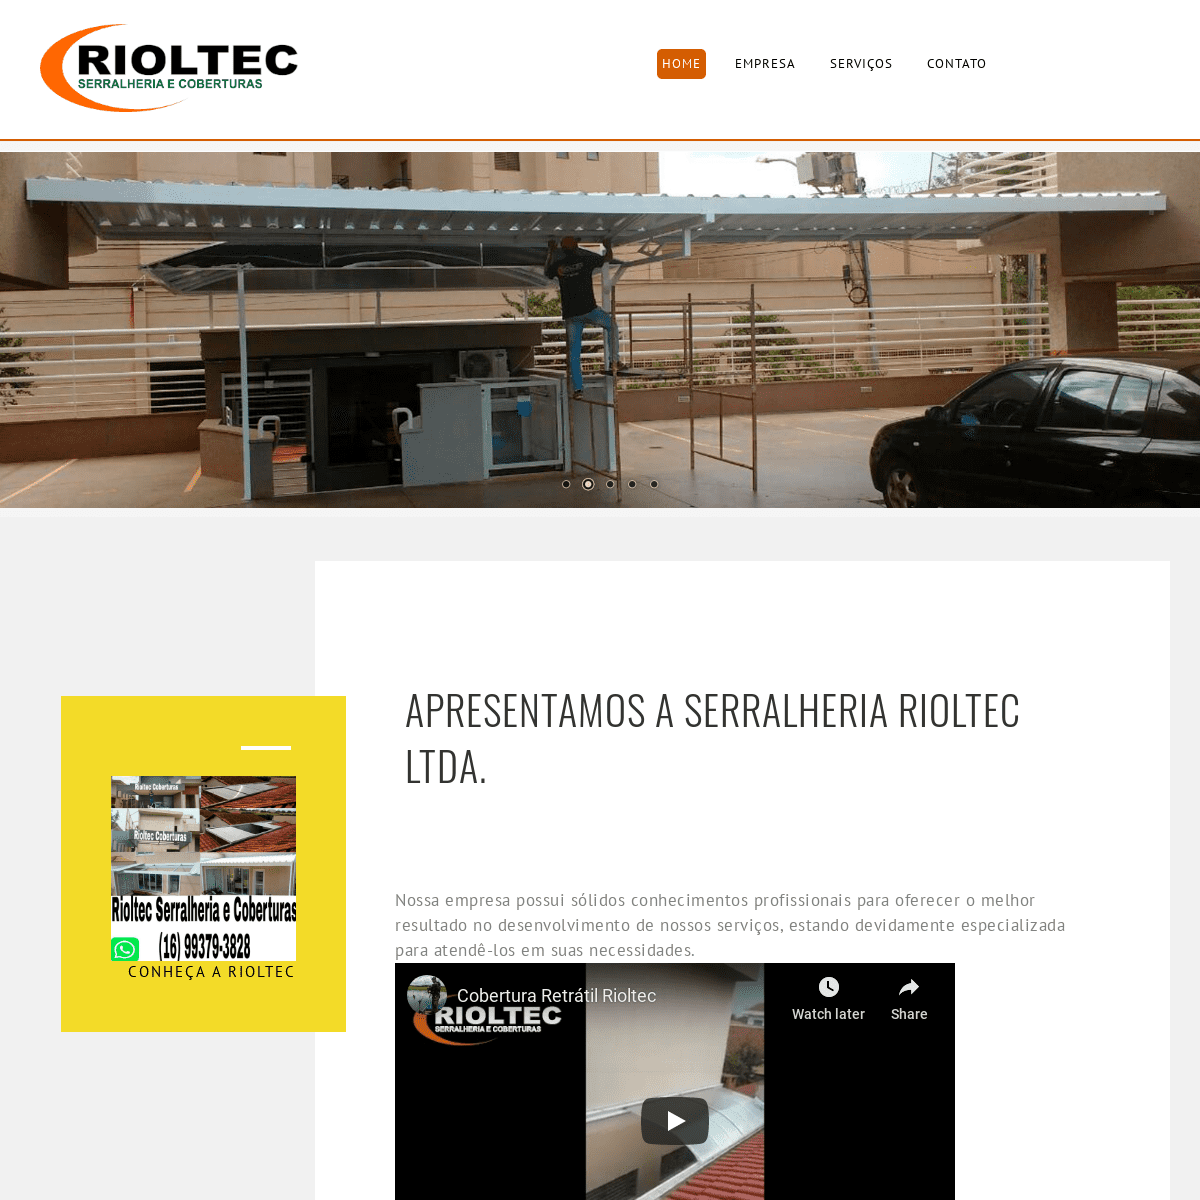 A complete backup of rioltec.com.br